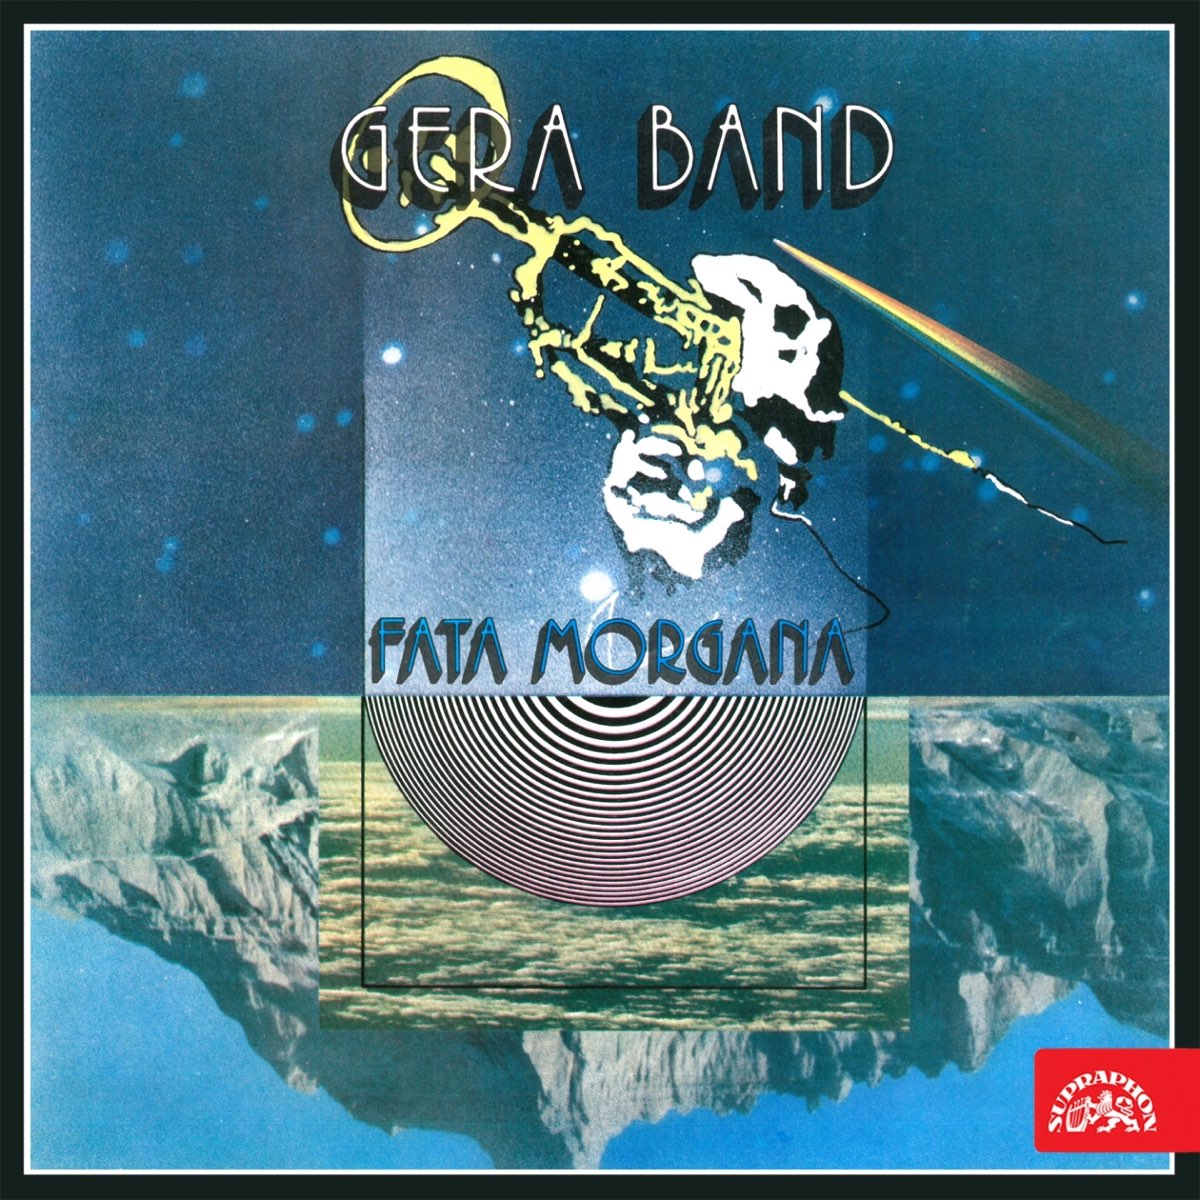 Fata morgana by Gera Band on Apple Music